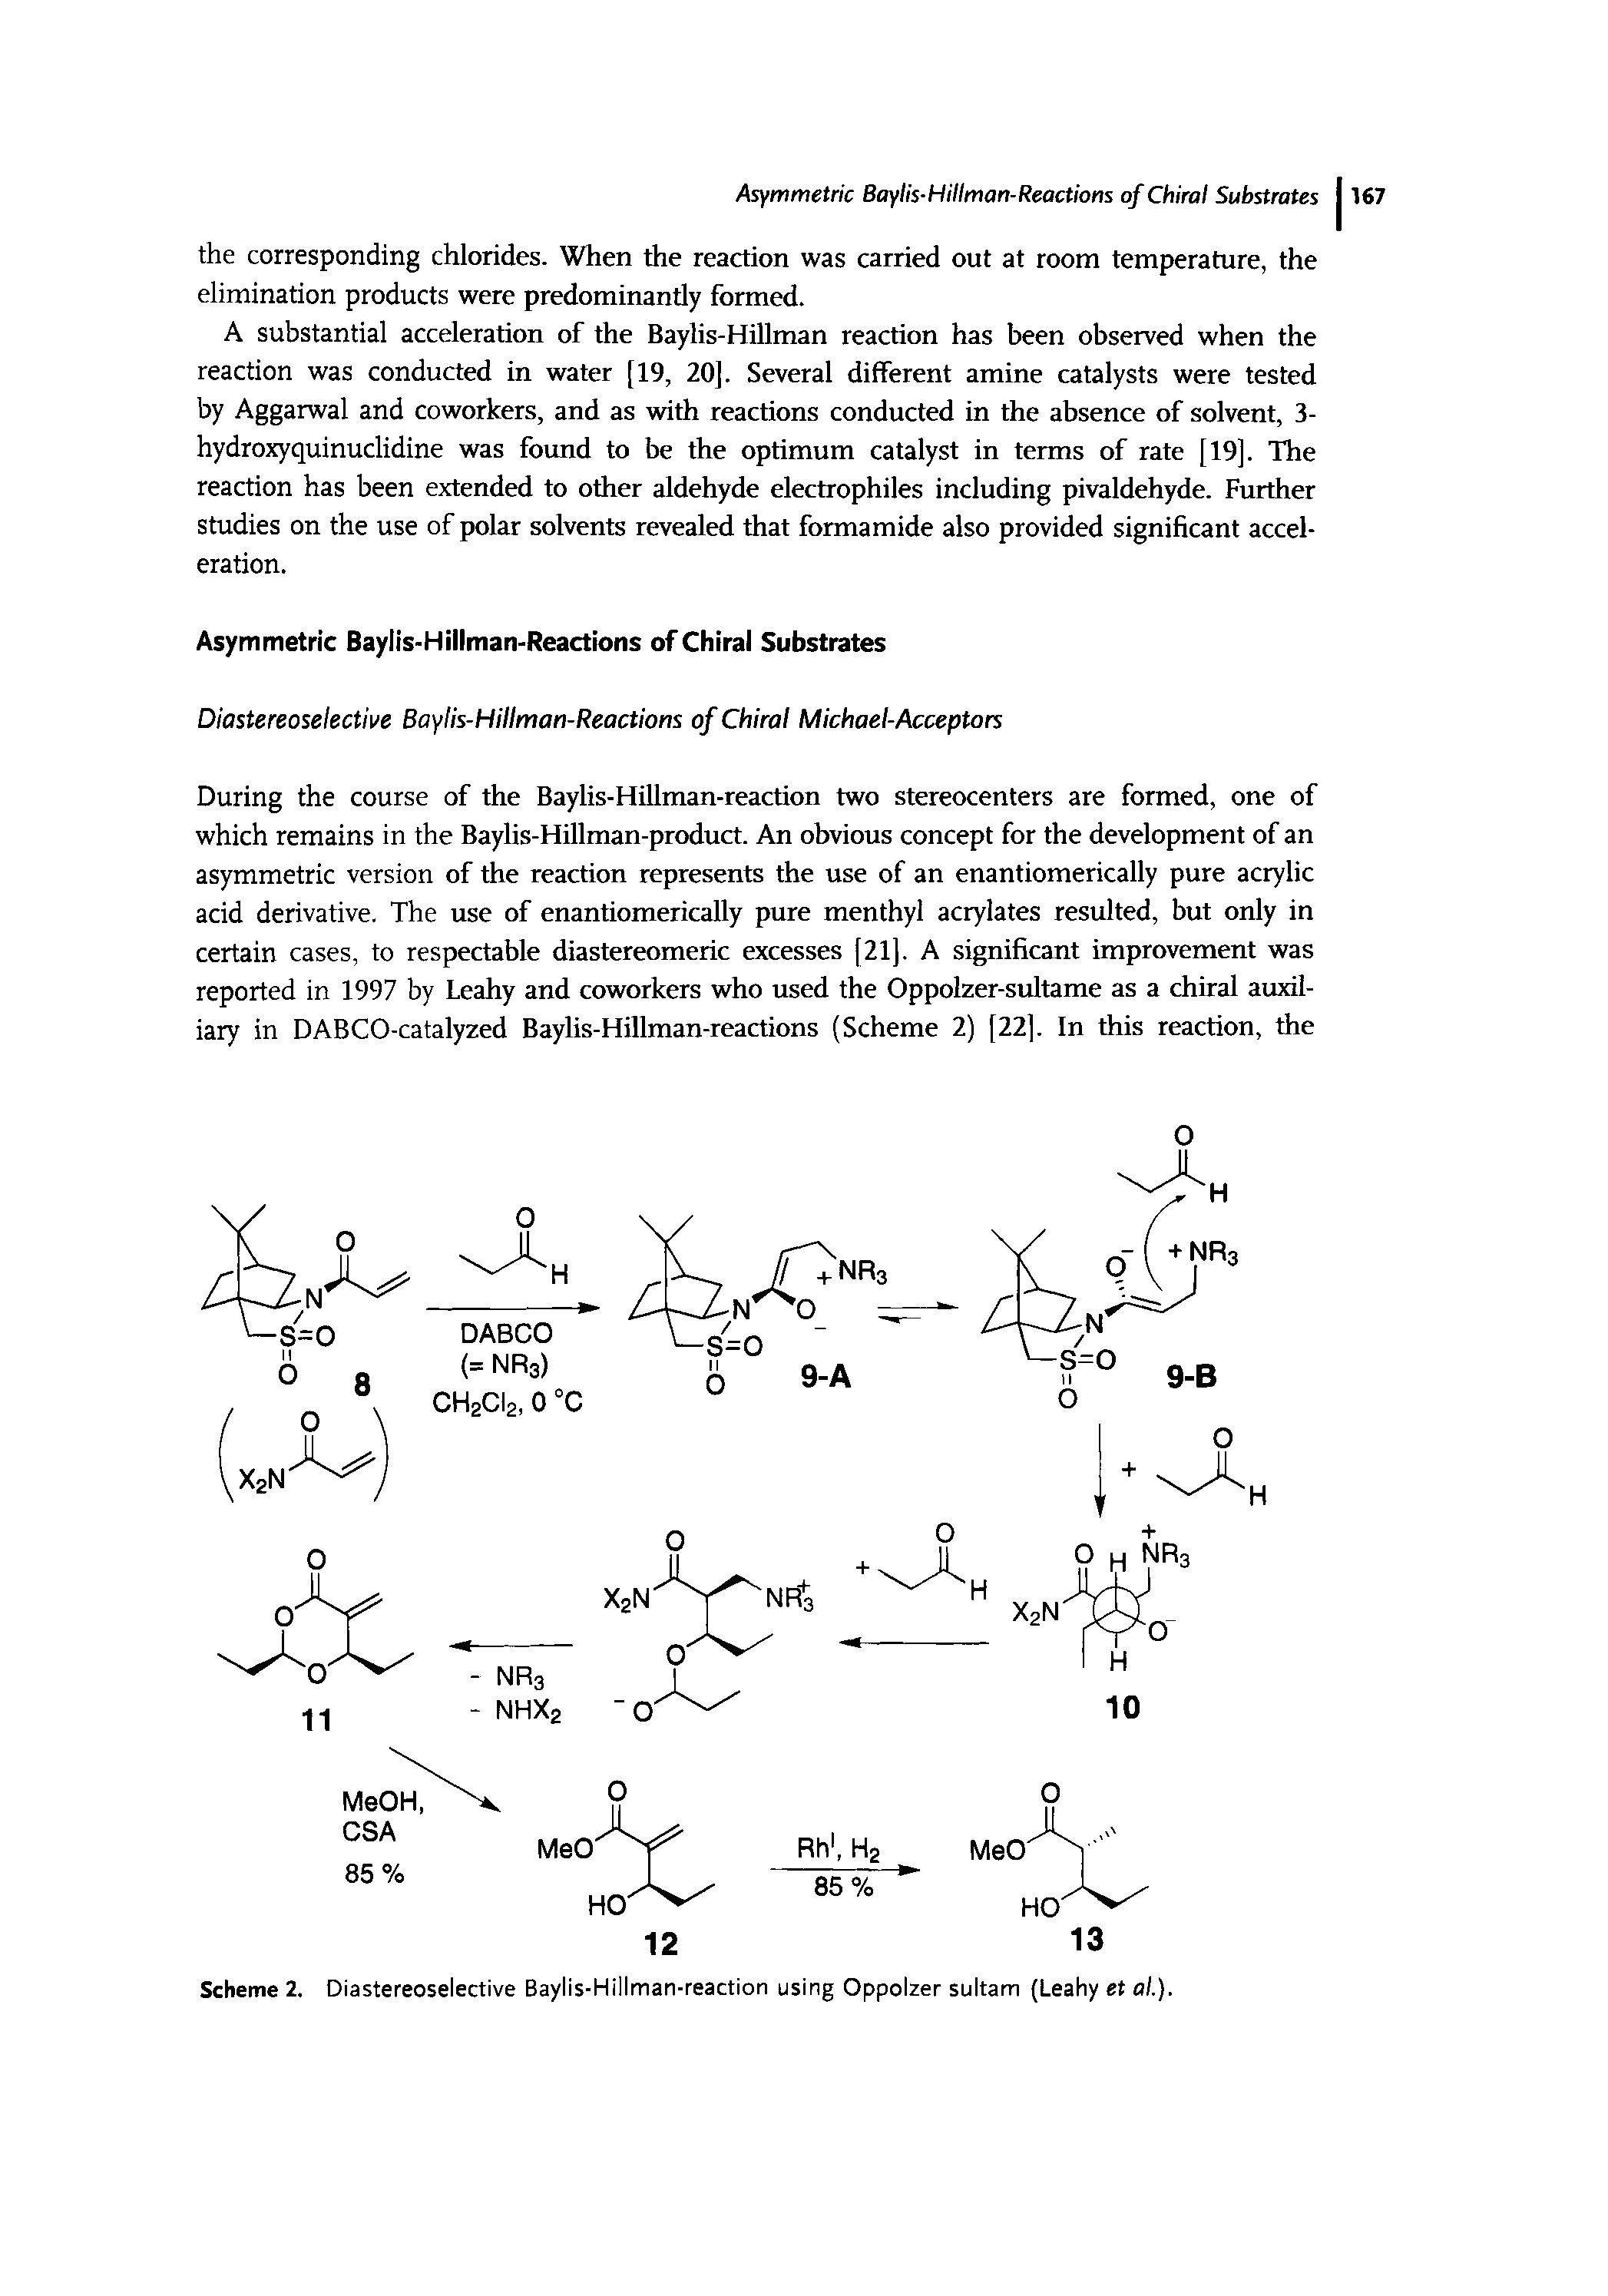 Scheme 2. Diastereoselective Baylis-Hillman-reaction using Oppolzer sultam (Leahy et al).